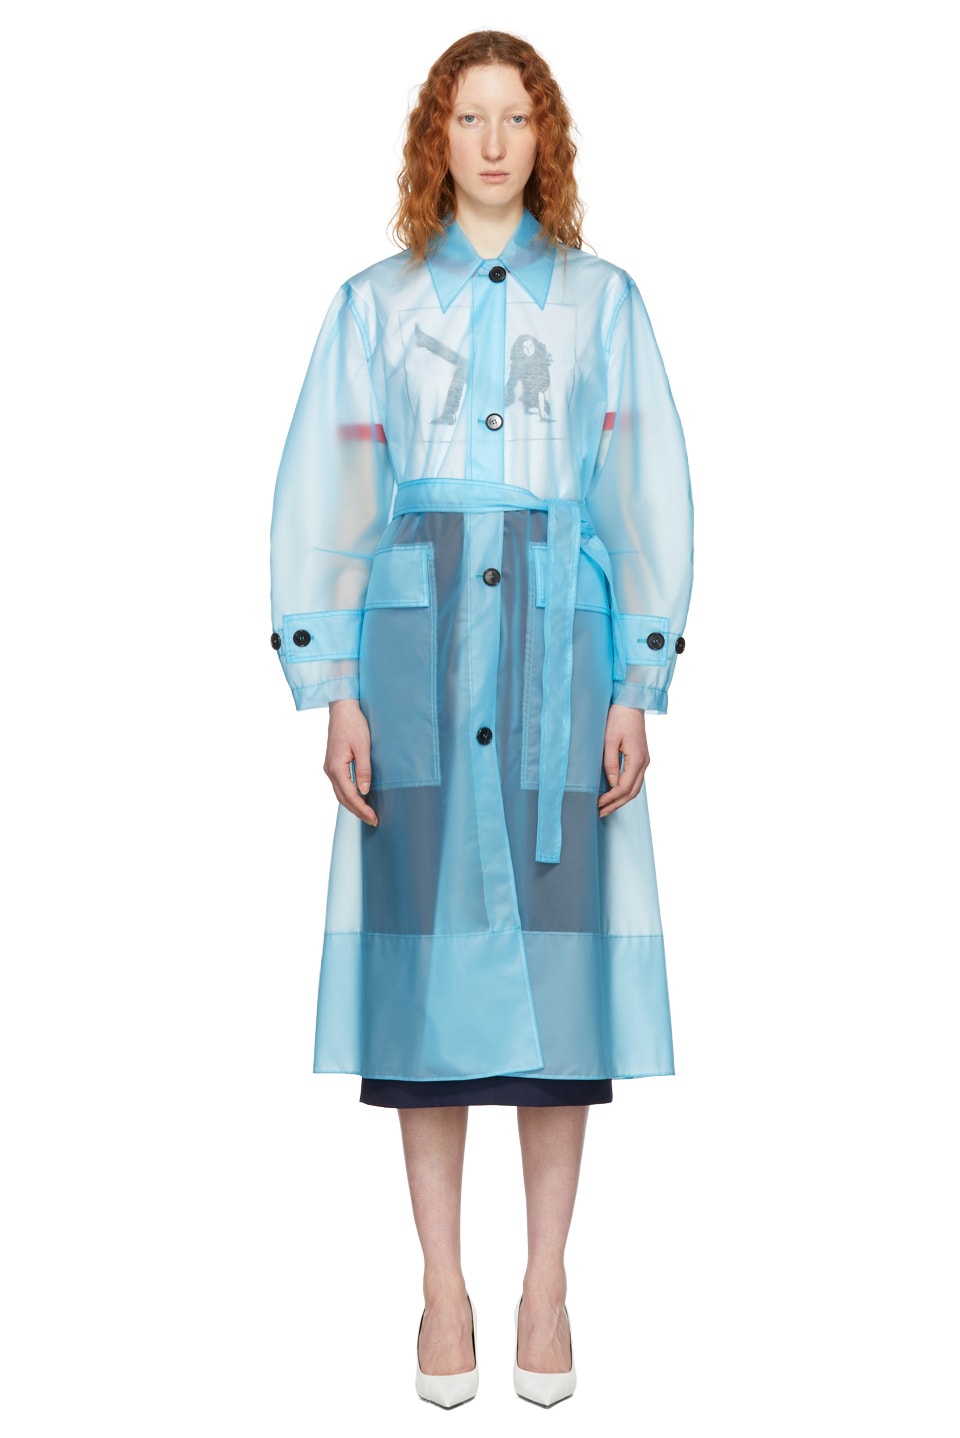 Calvin Klein Clear Blue Plastic Coat 2018 Trend Translucent Blue Raf Simons